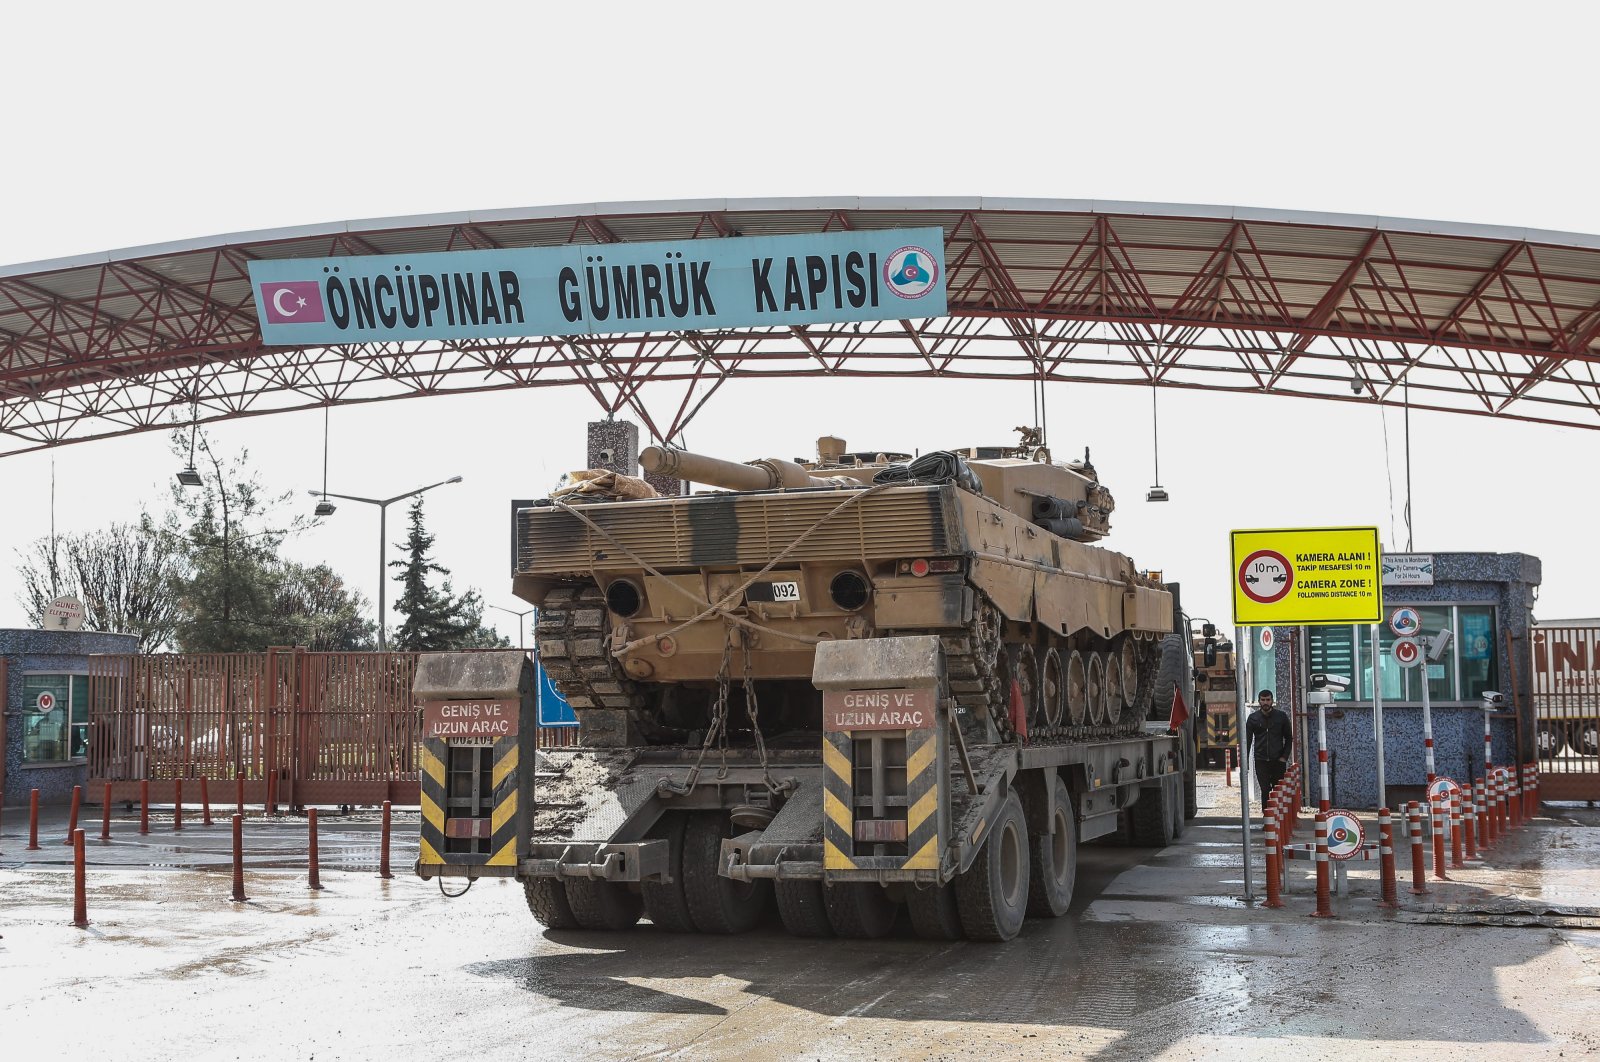 Öncüpınar border gate in Turkey's Kilis province on the Syrian border in this undated file photo (Sabah File Photo)